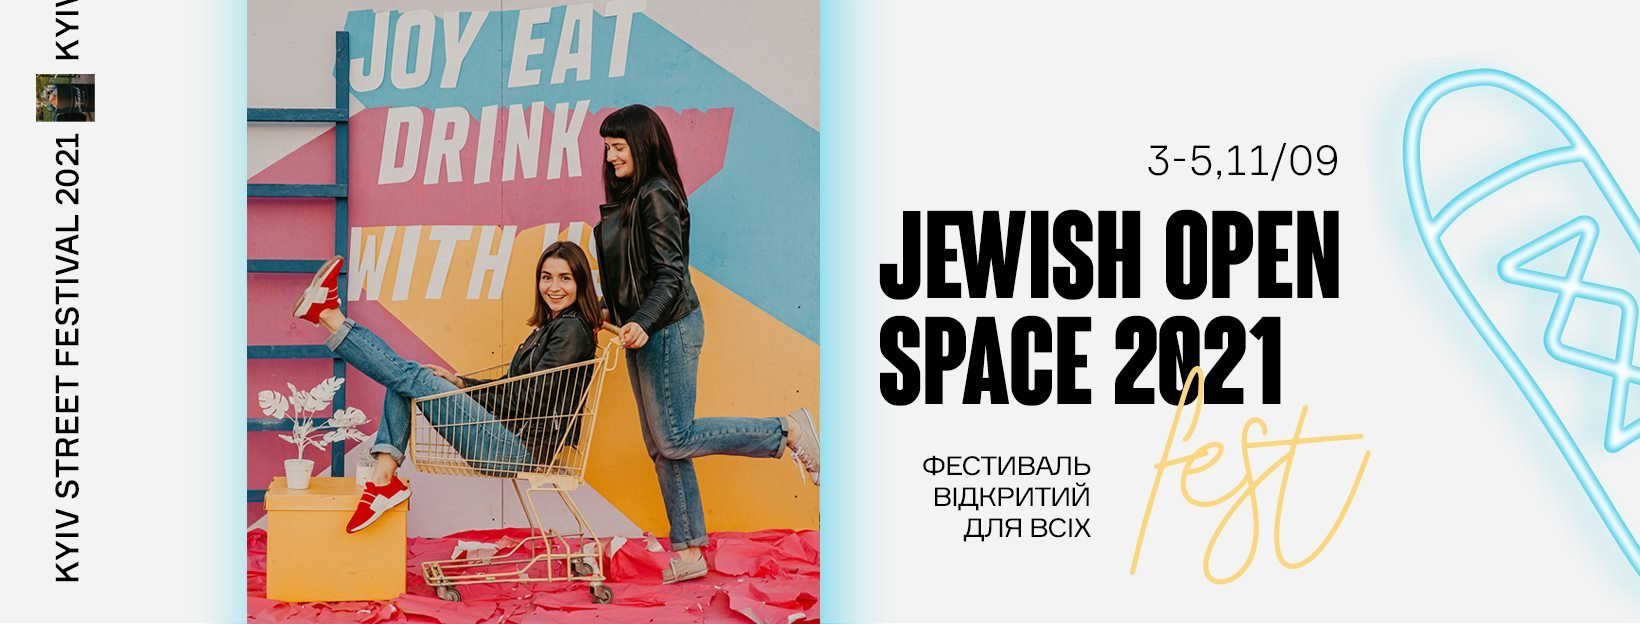 Jewish Open Space 2021